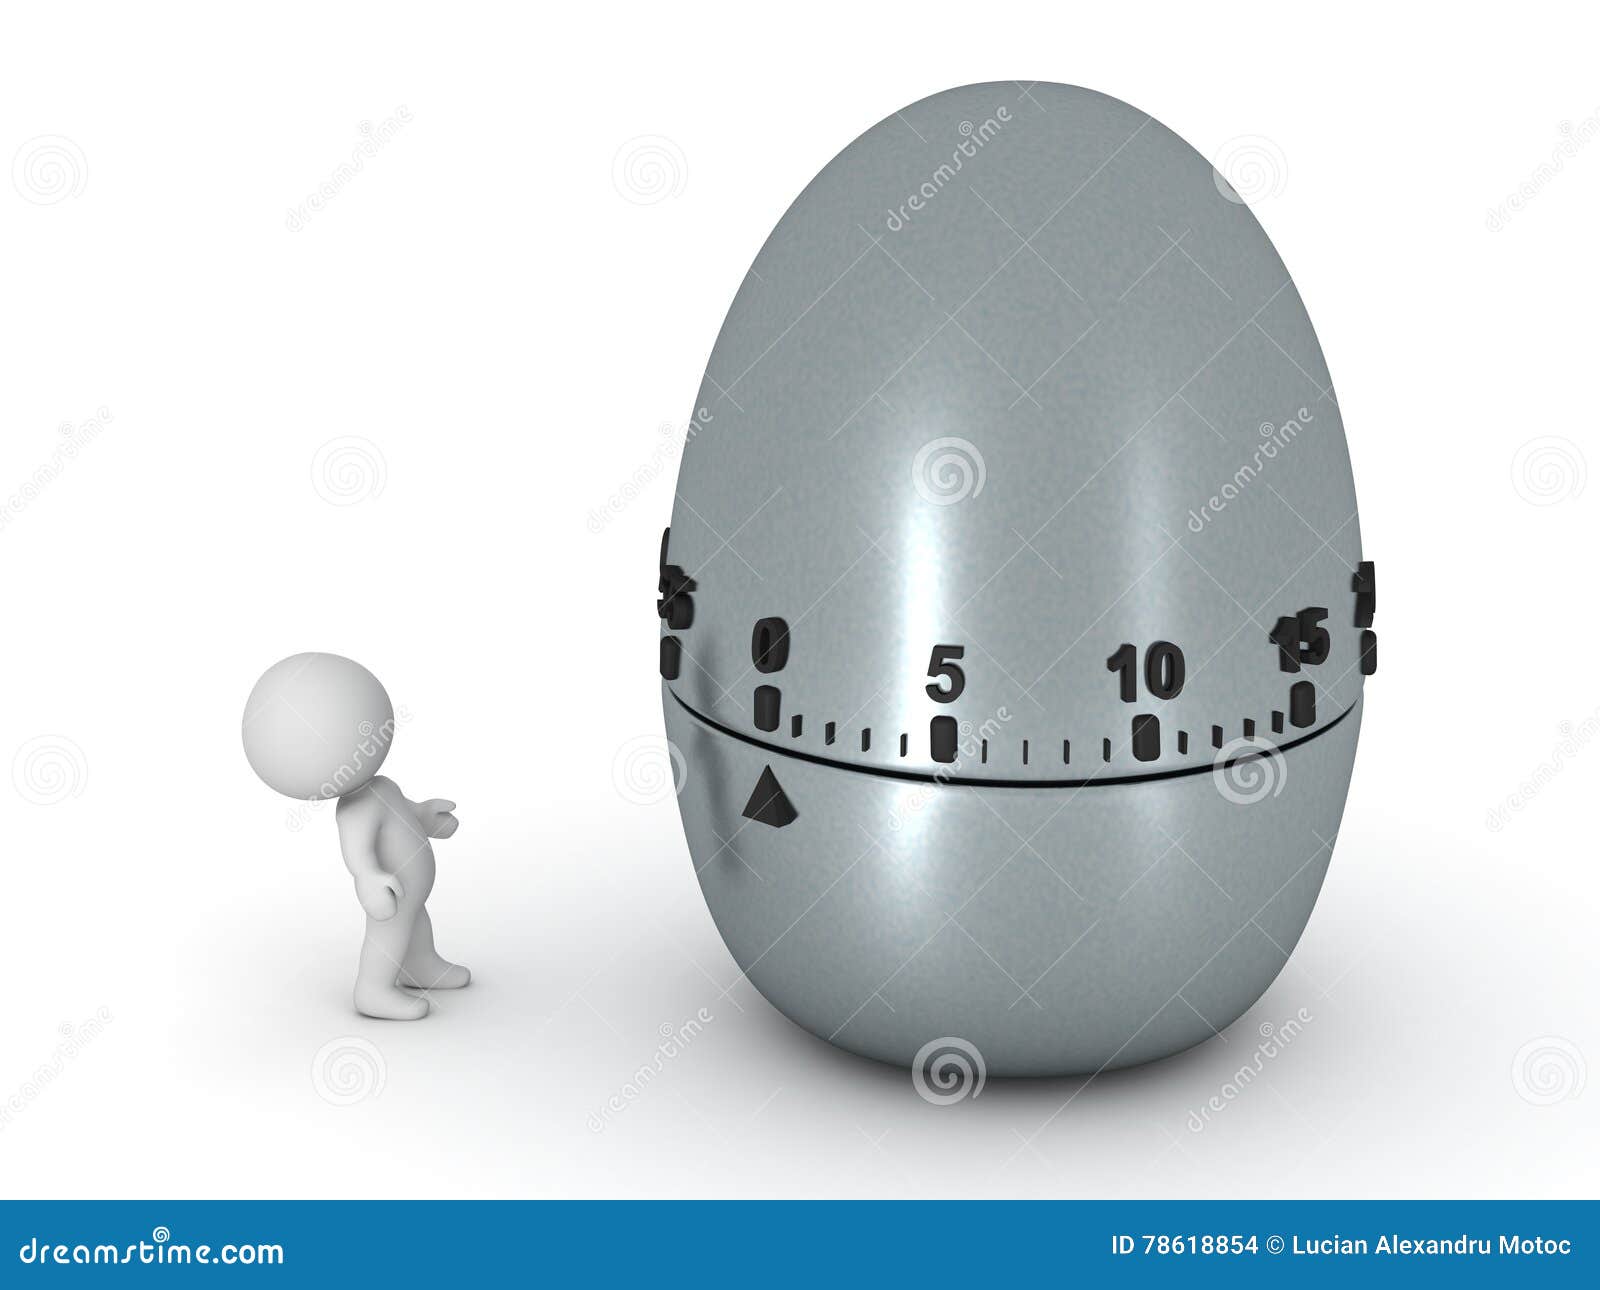 3D Character Looking Up at a Pomodoro Egg Timer Stock Illustration - Illustration of cartoon, 78618854